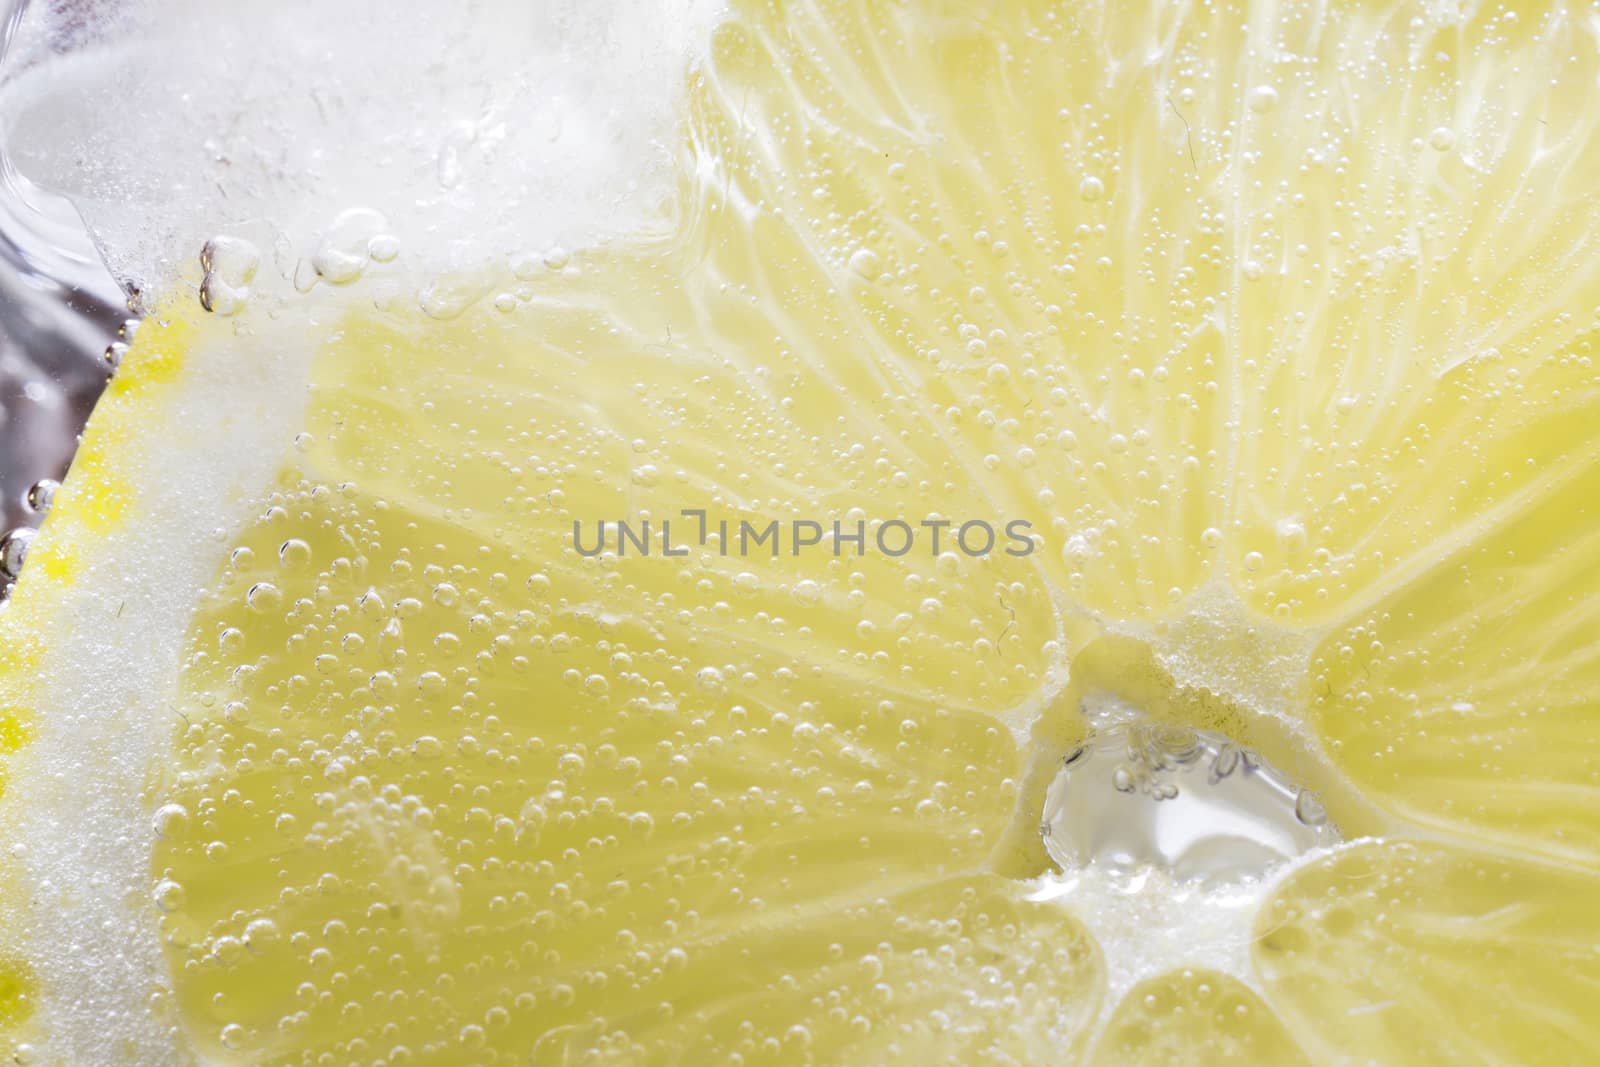 Lemon in the bubbles by AlexBush